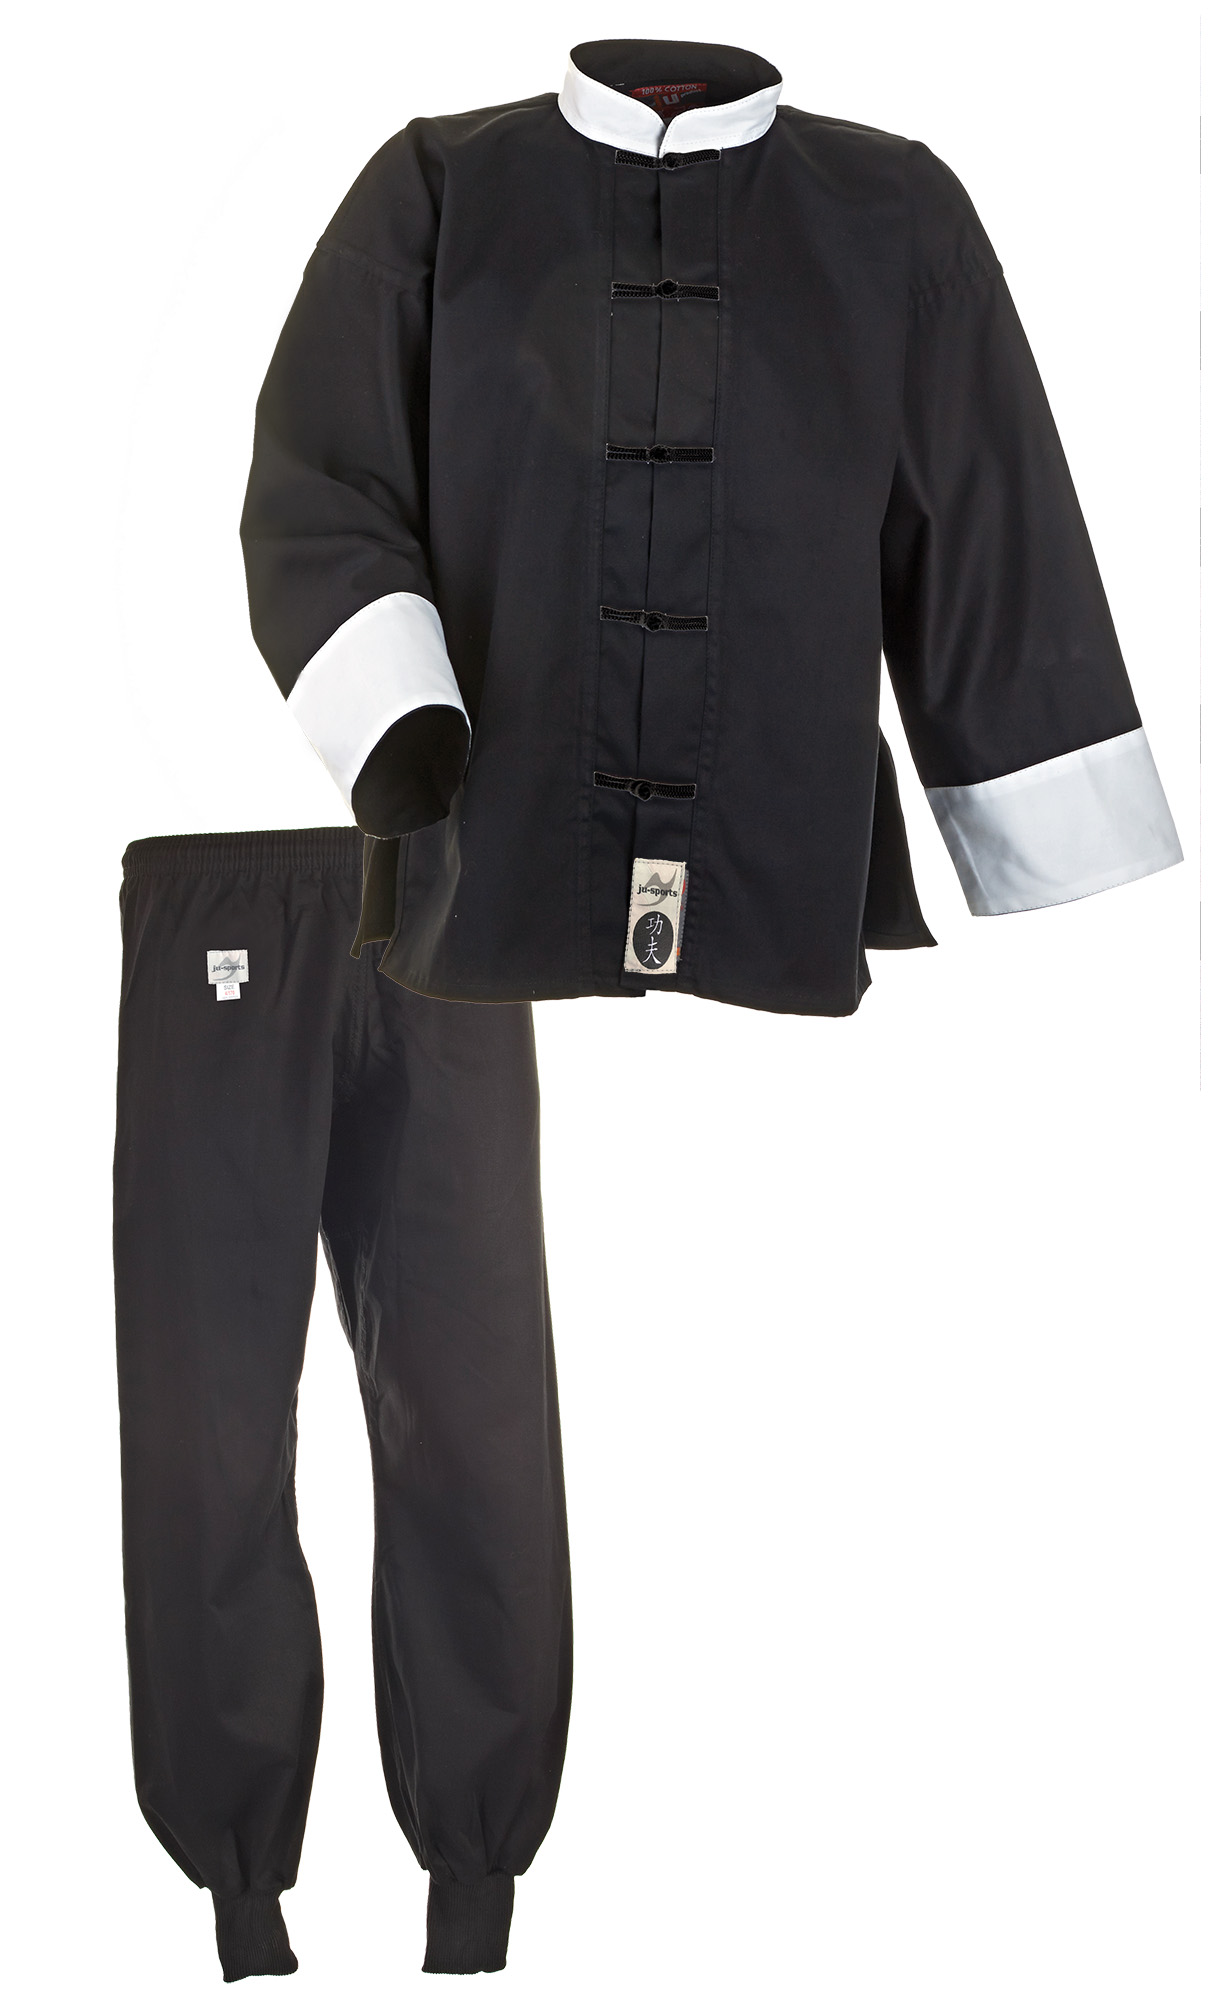 Kung Fu uniform black/white